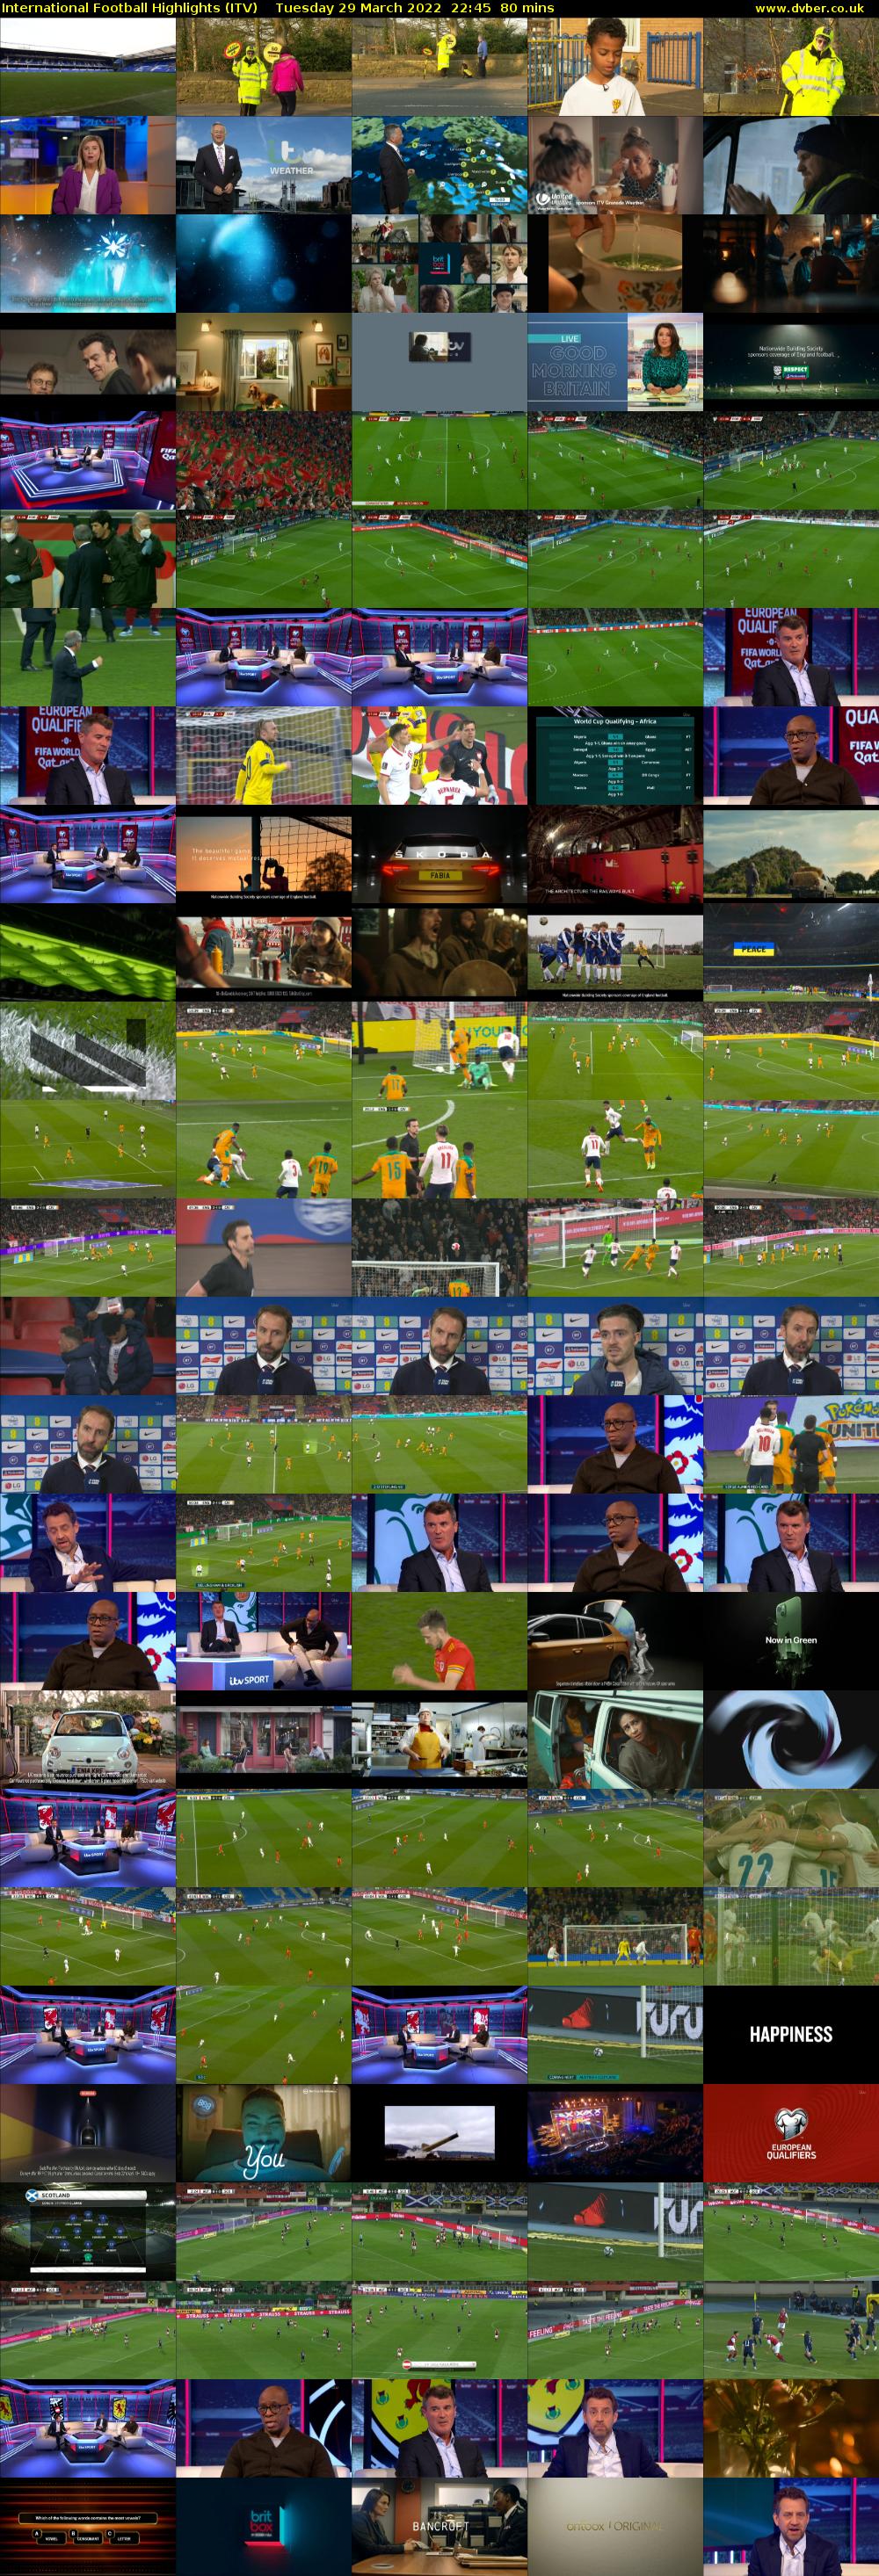 International Football Highlights (ITV) Tuesday 29 March 2022 22:45 - 00:05